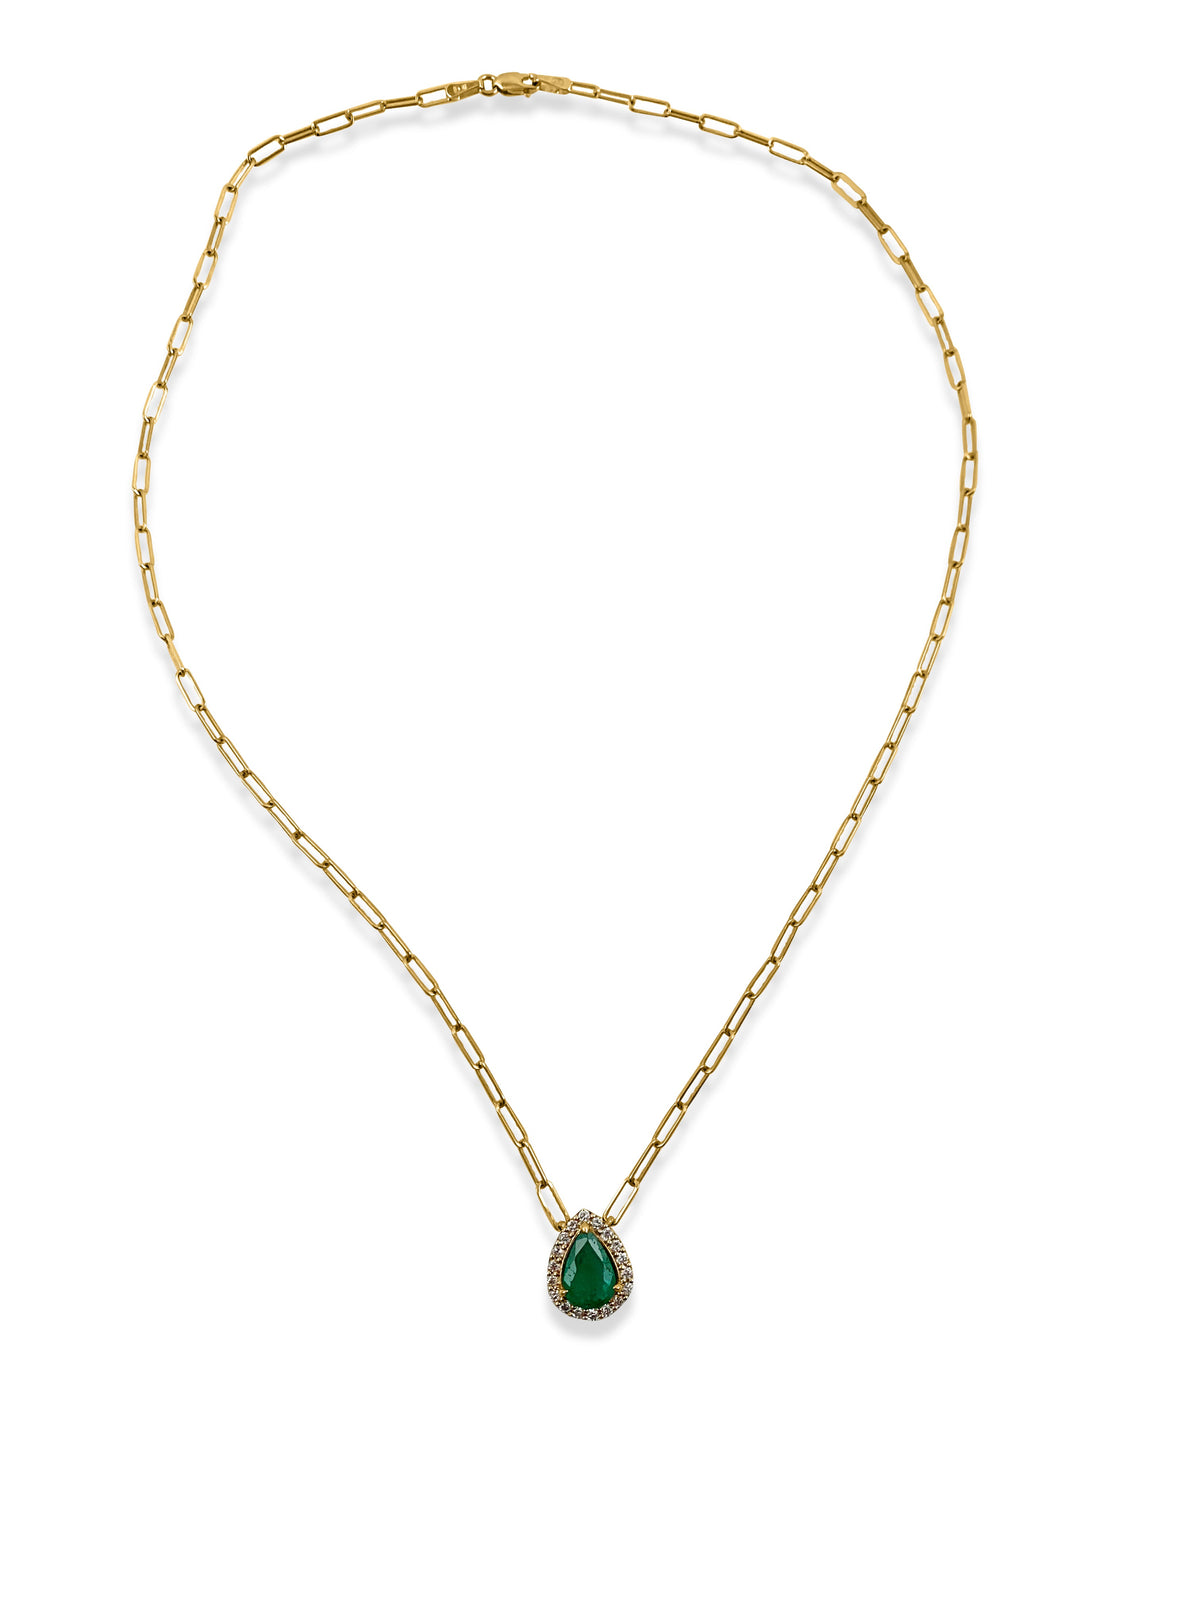 Emerald & Diamond Pendant in a Paperclip Chain Necklace